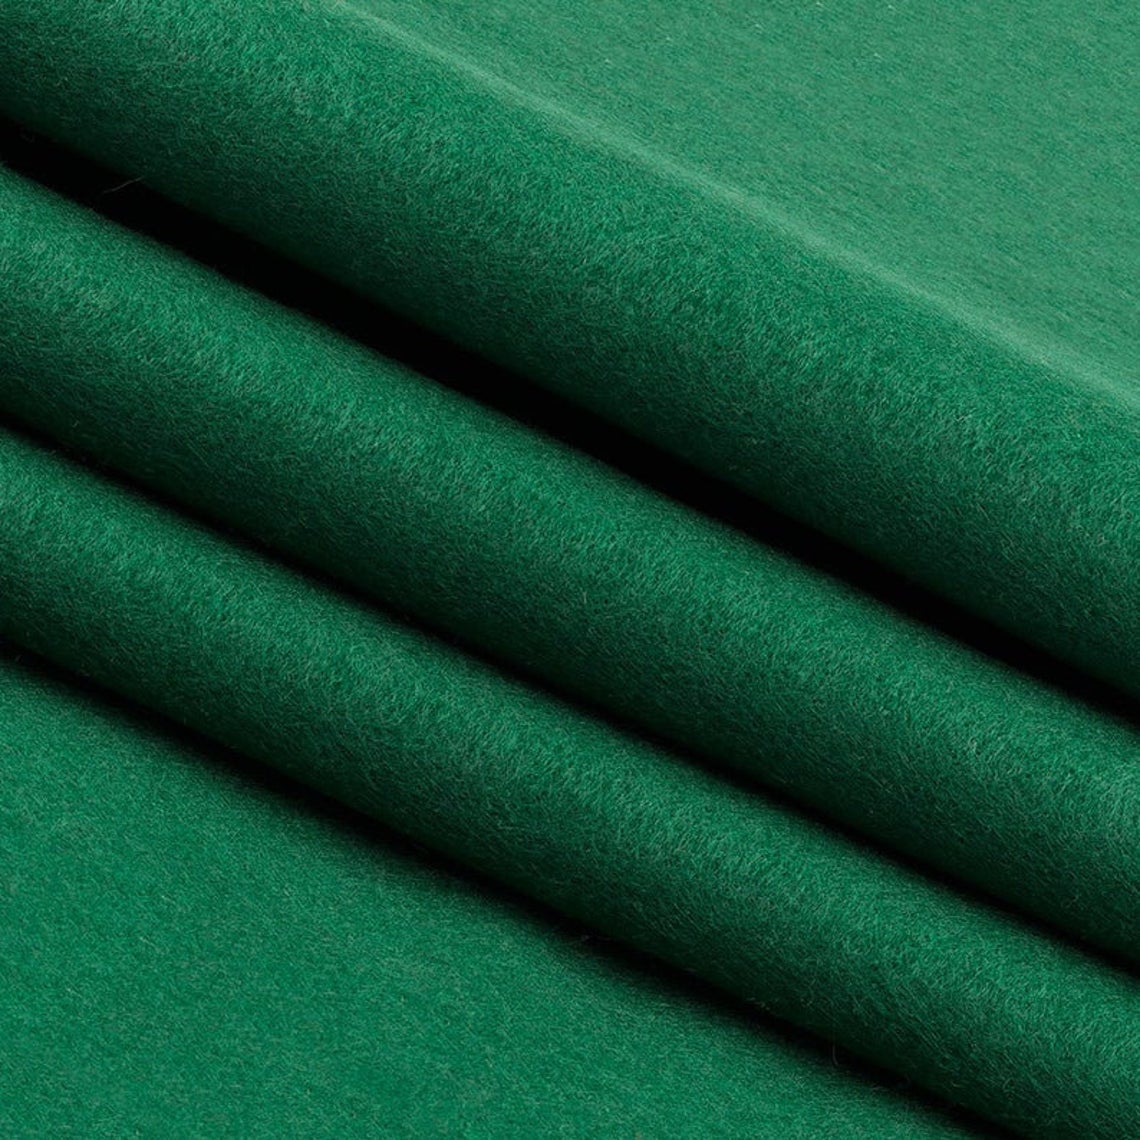 72" Wide 1.6 mm Thick Acrylic Kelly Green Felt Fabric By The YardICE FABRICSICE FABRICSPer Yard1.6mm Thick72" Wide 1.6 mm Thick Acrylic Kelly Green Felt Fabric By The Yard ICE FABRICS